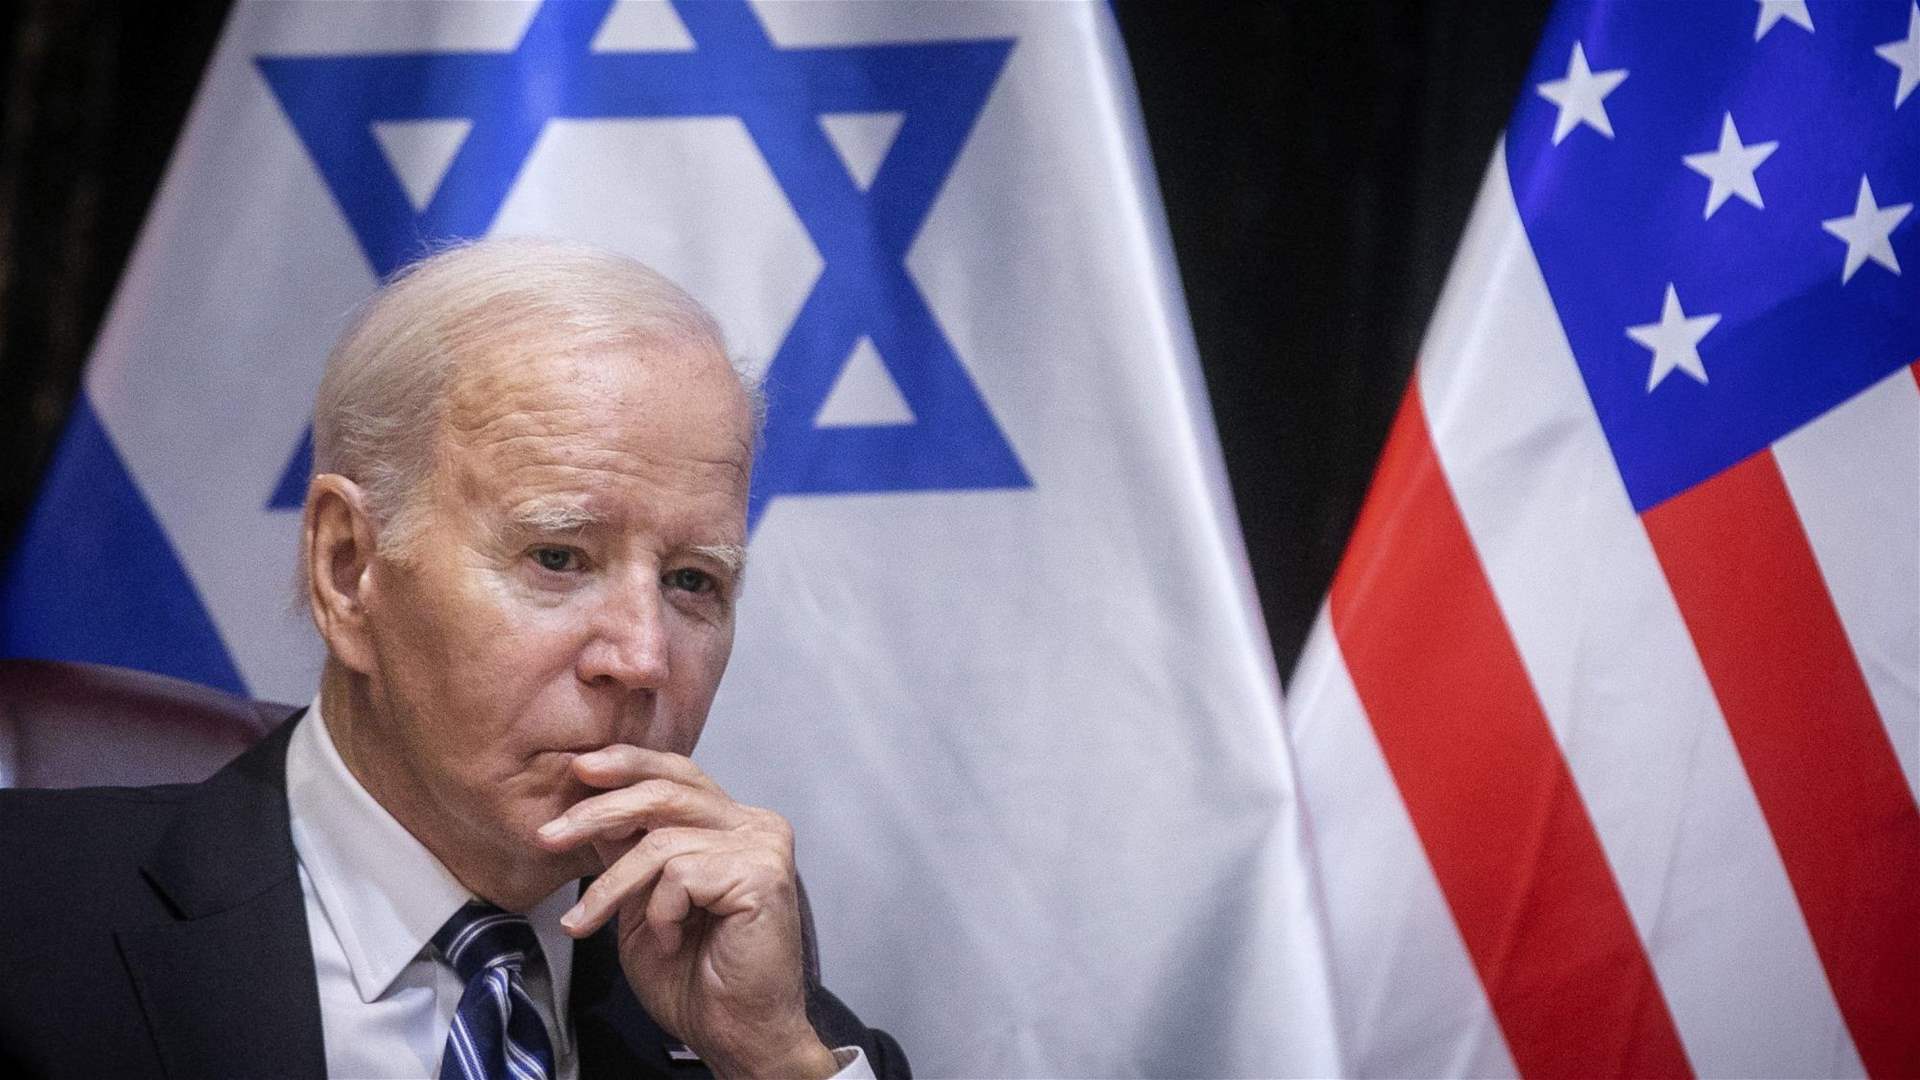 Biden will tell Netanyahu ceasefire needed &#39;soon&#39;: White House